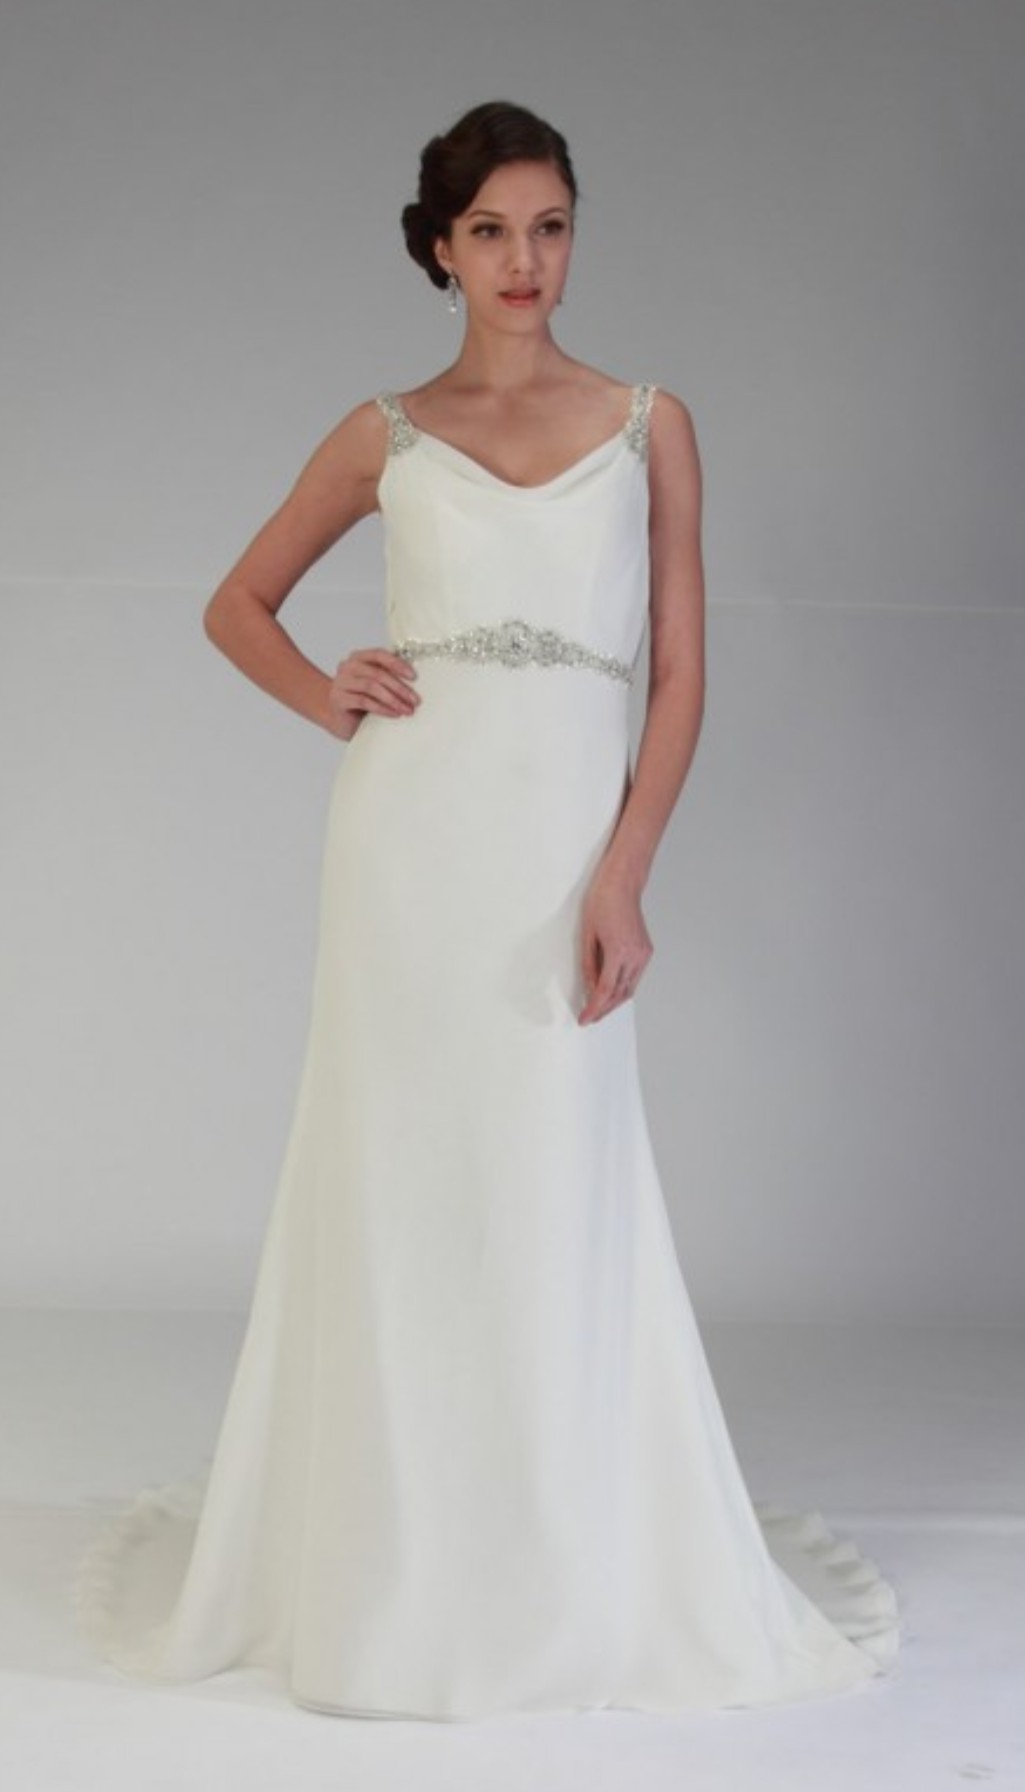 Venus Bridal PA9189 New Wedding Dress Save 65% - Stillwhite